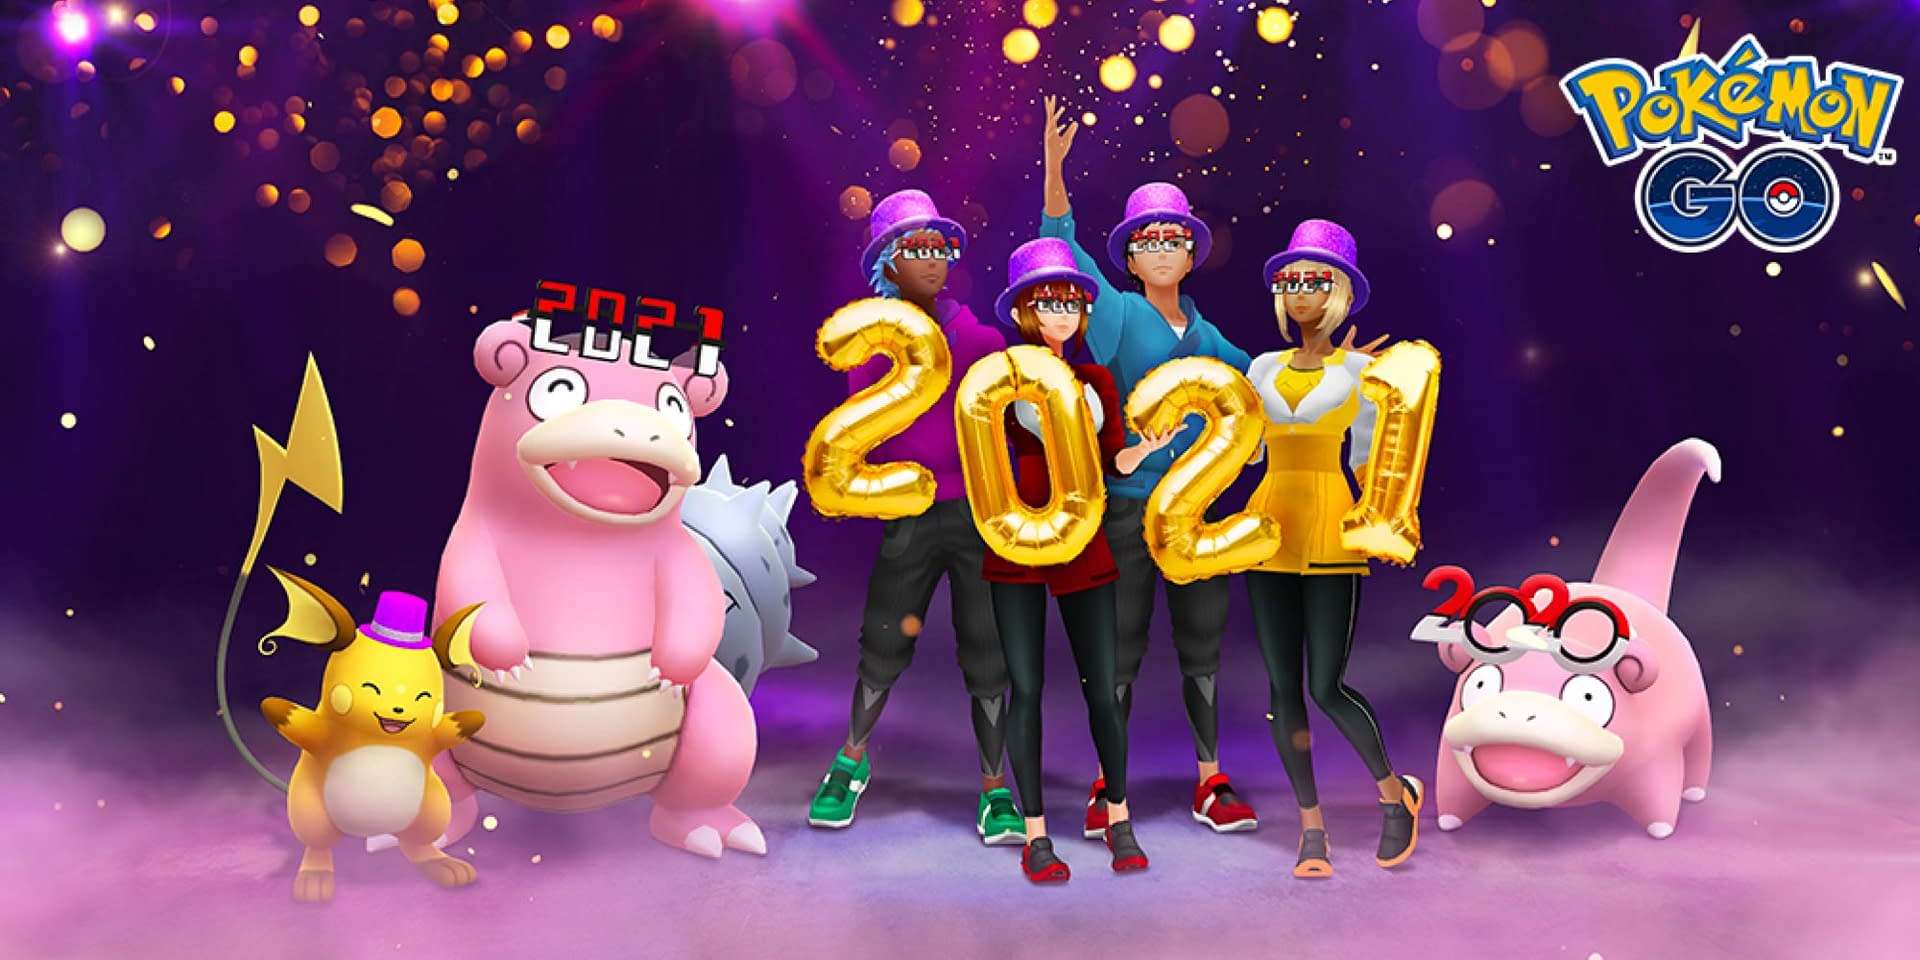 Pokémon GO New Years 2021 Celebration Event Review